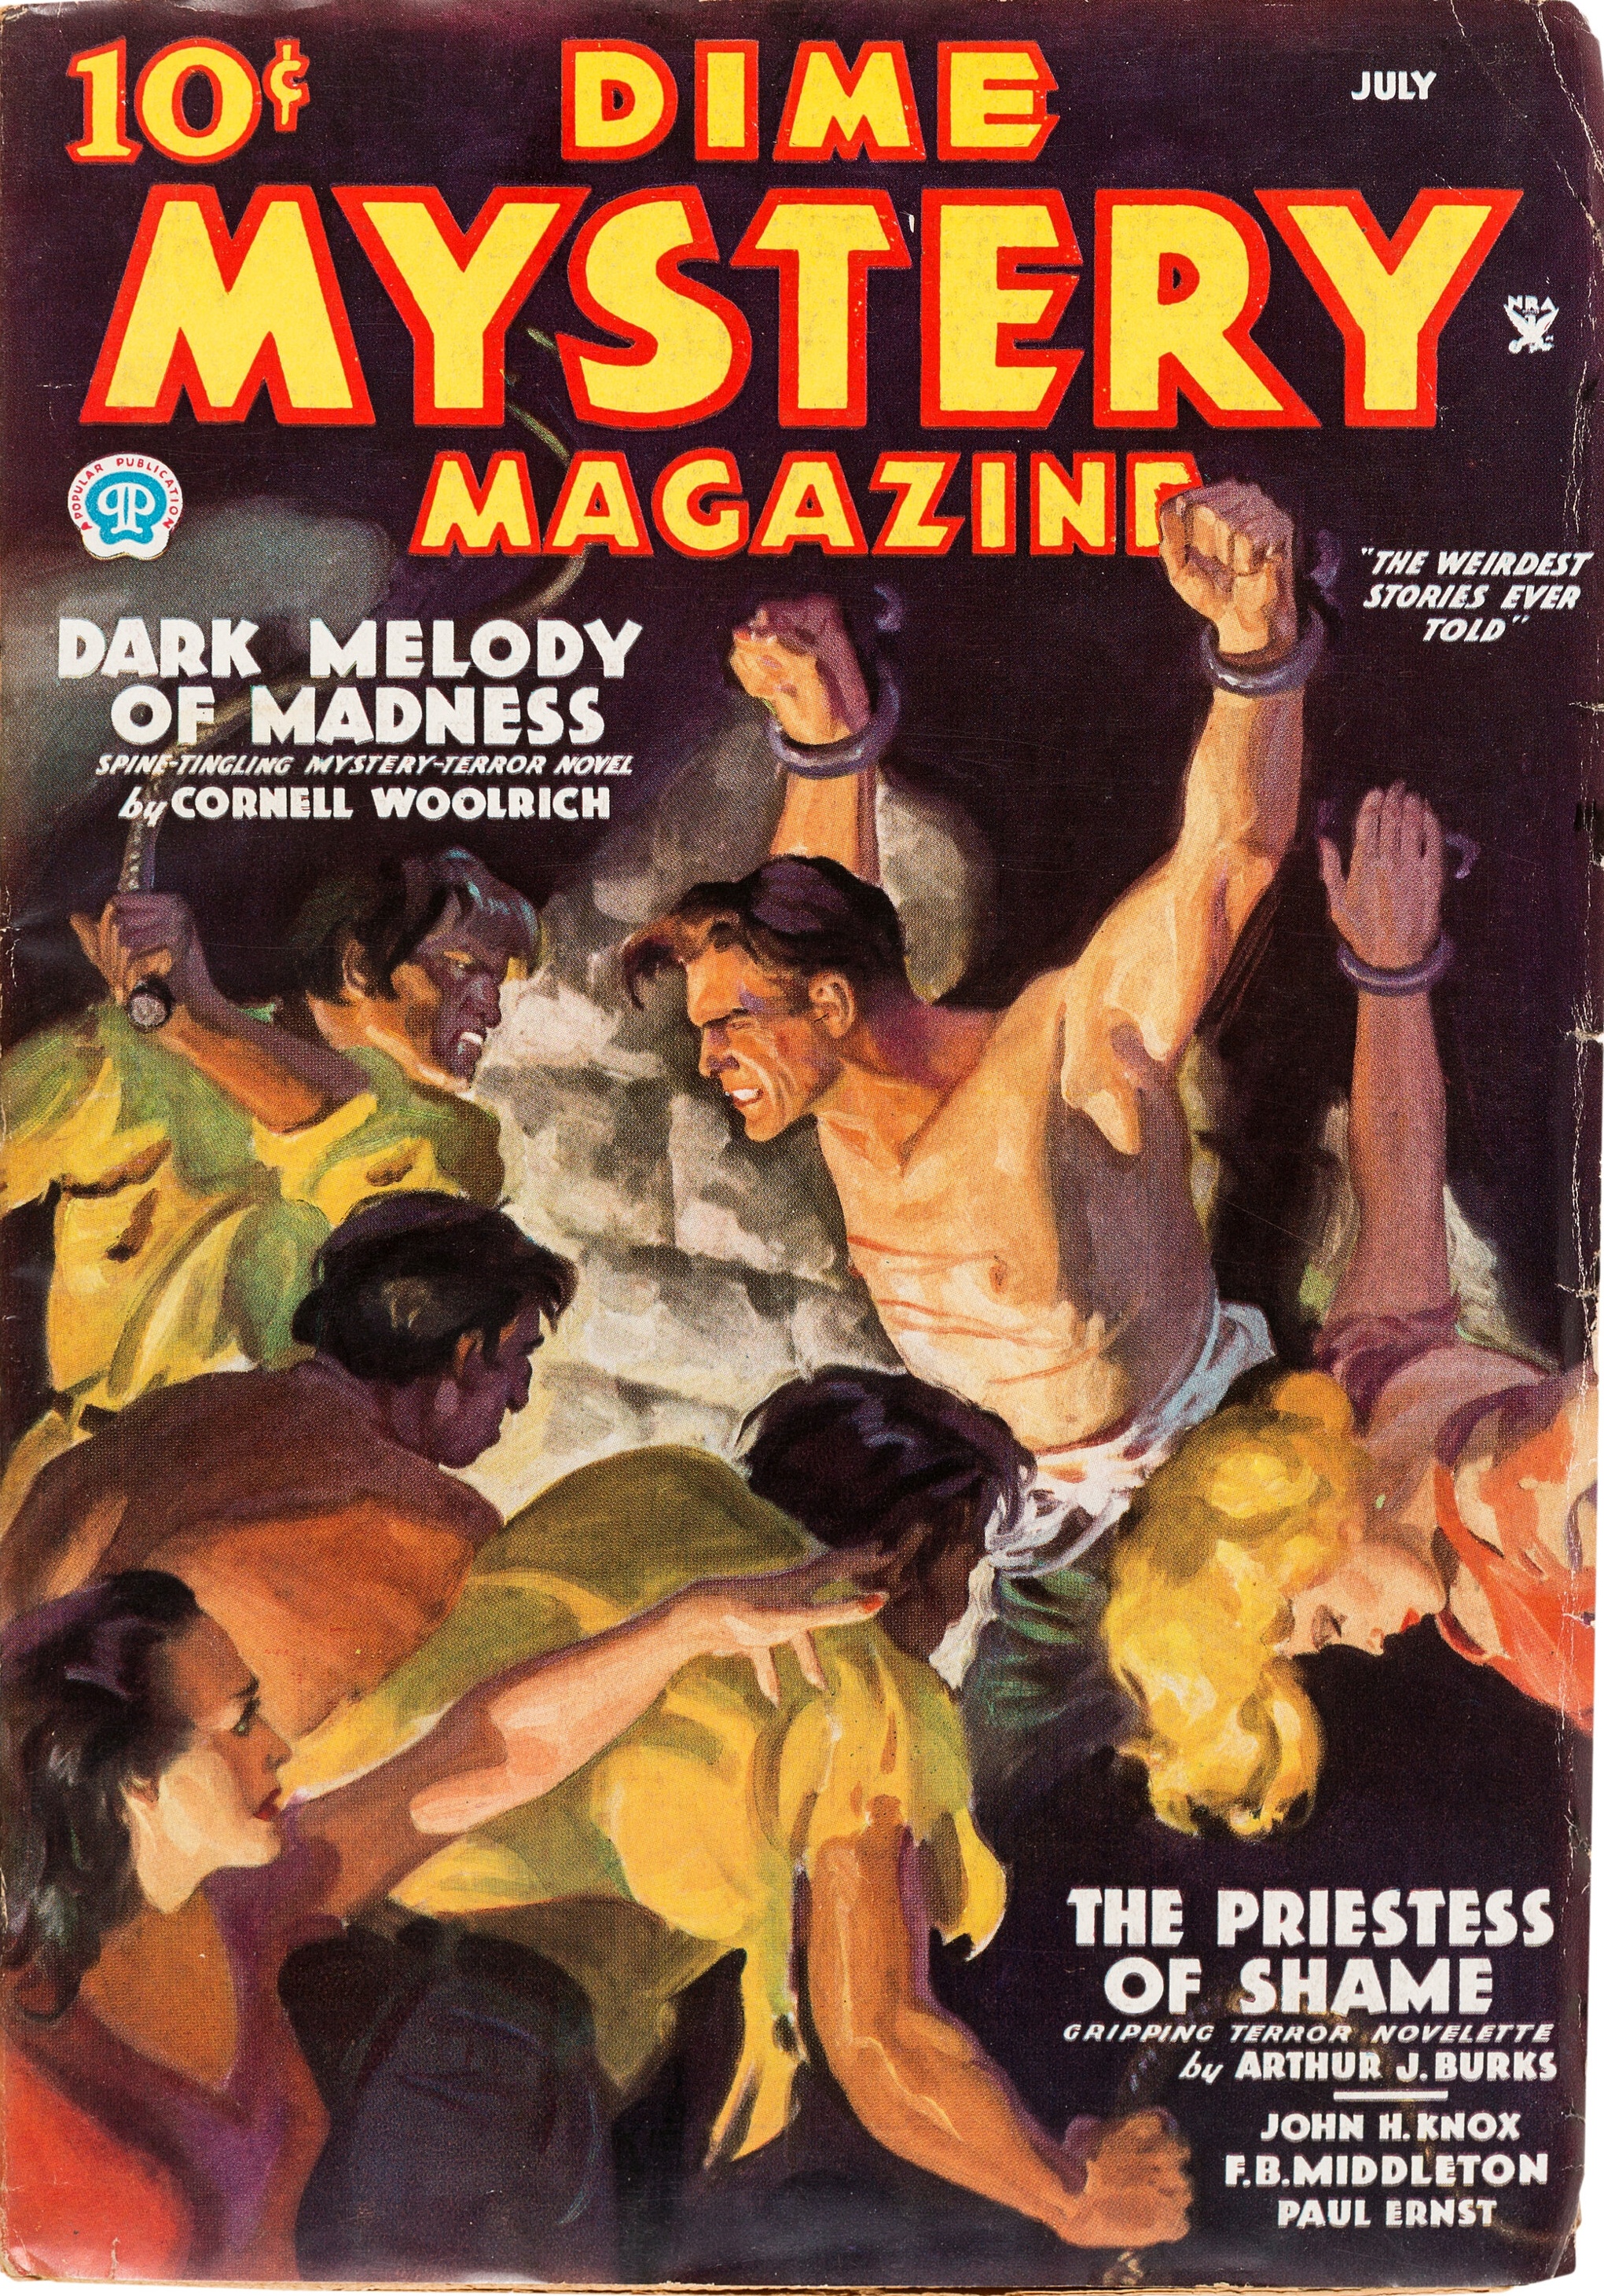 Dime Mystery Magazine - July 1935